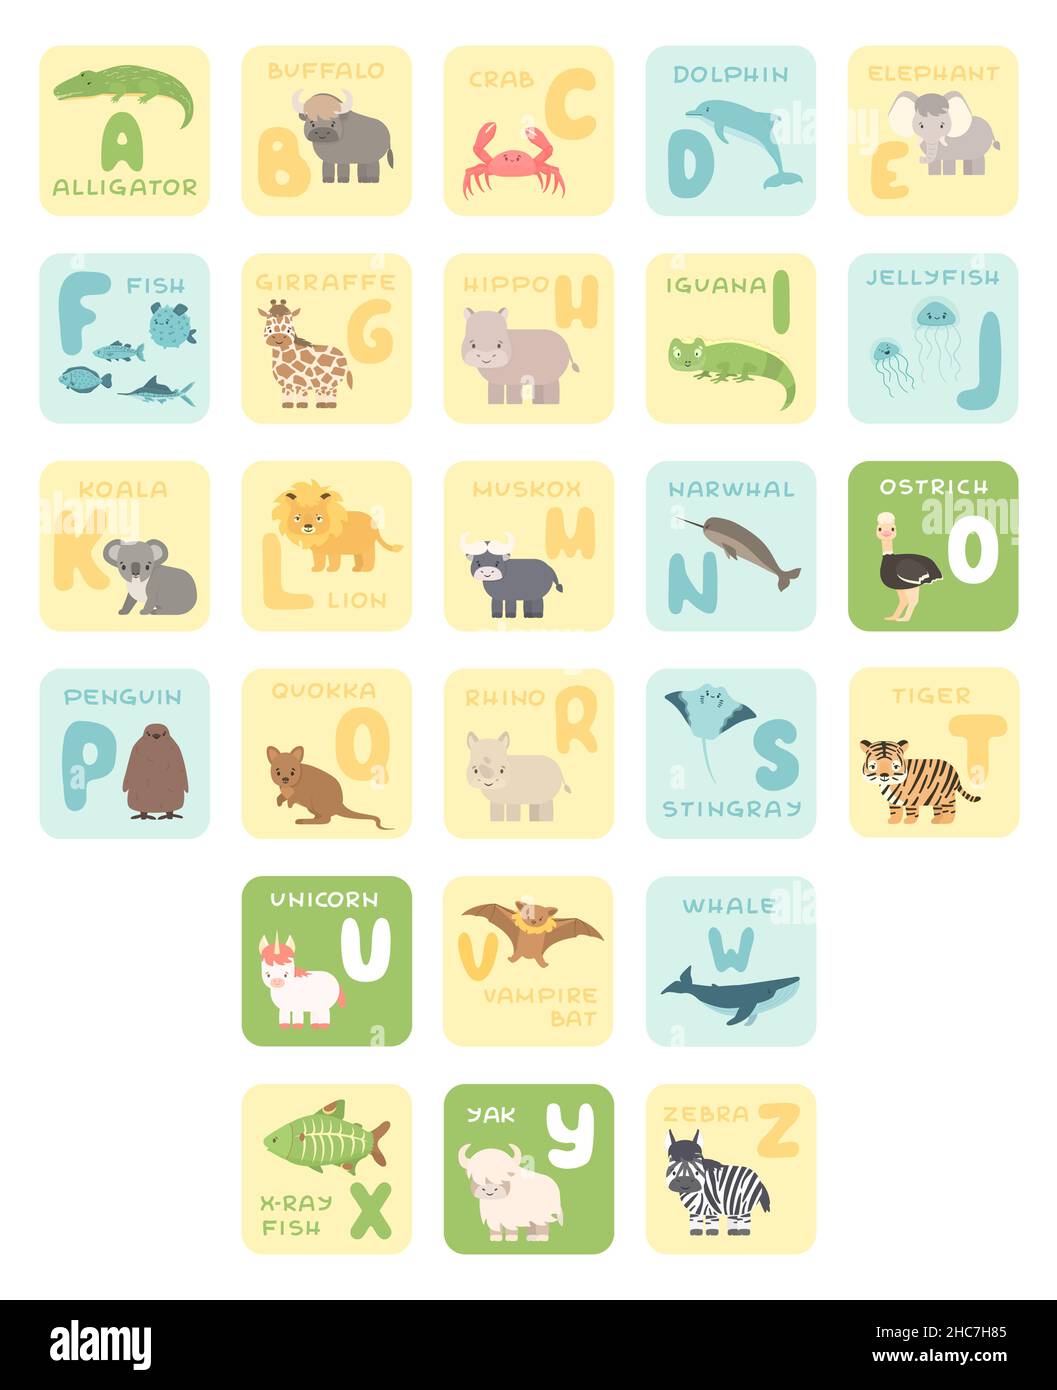 Cute A-Z alphabet cards with cartoon animals. Vector zoo illustrations. Alligator, buffalo, crab, dolphin, fish, giraffe hippo, koala lion Muskox ostr Stock Vector